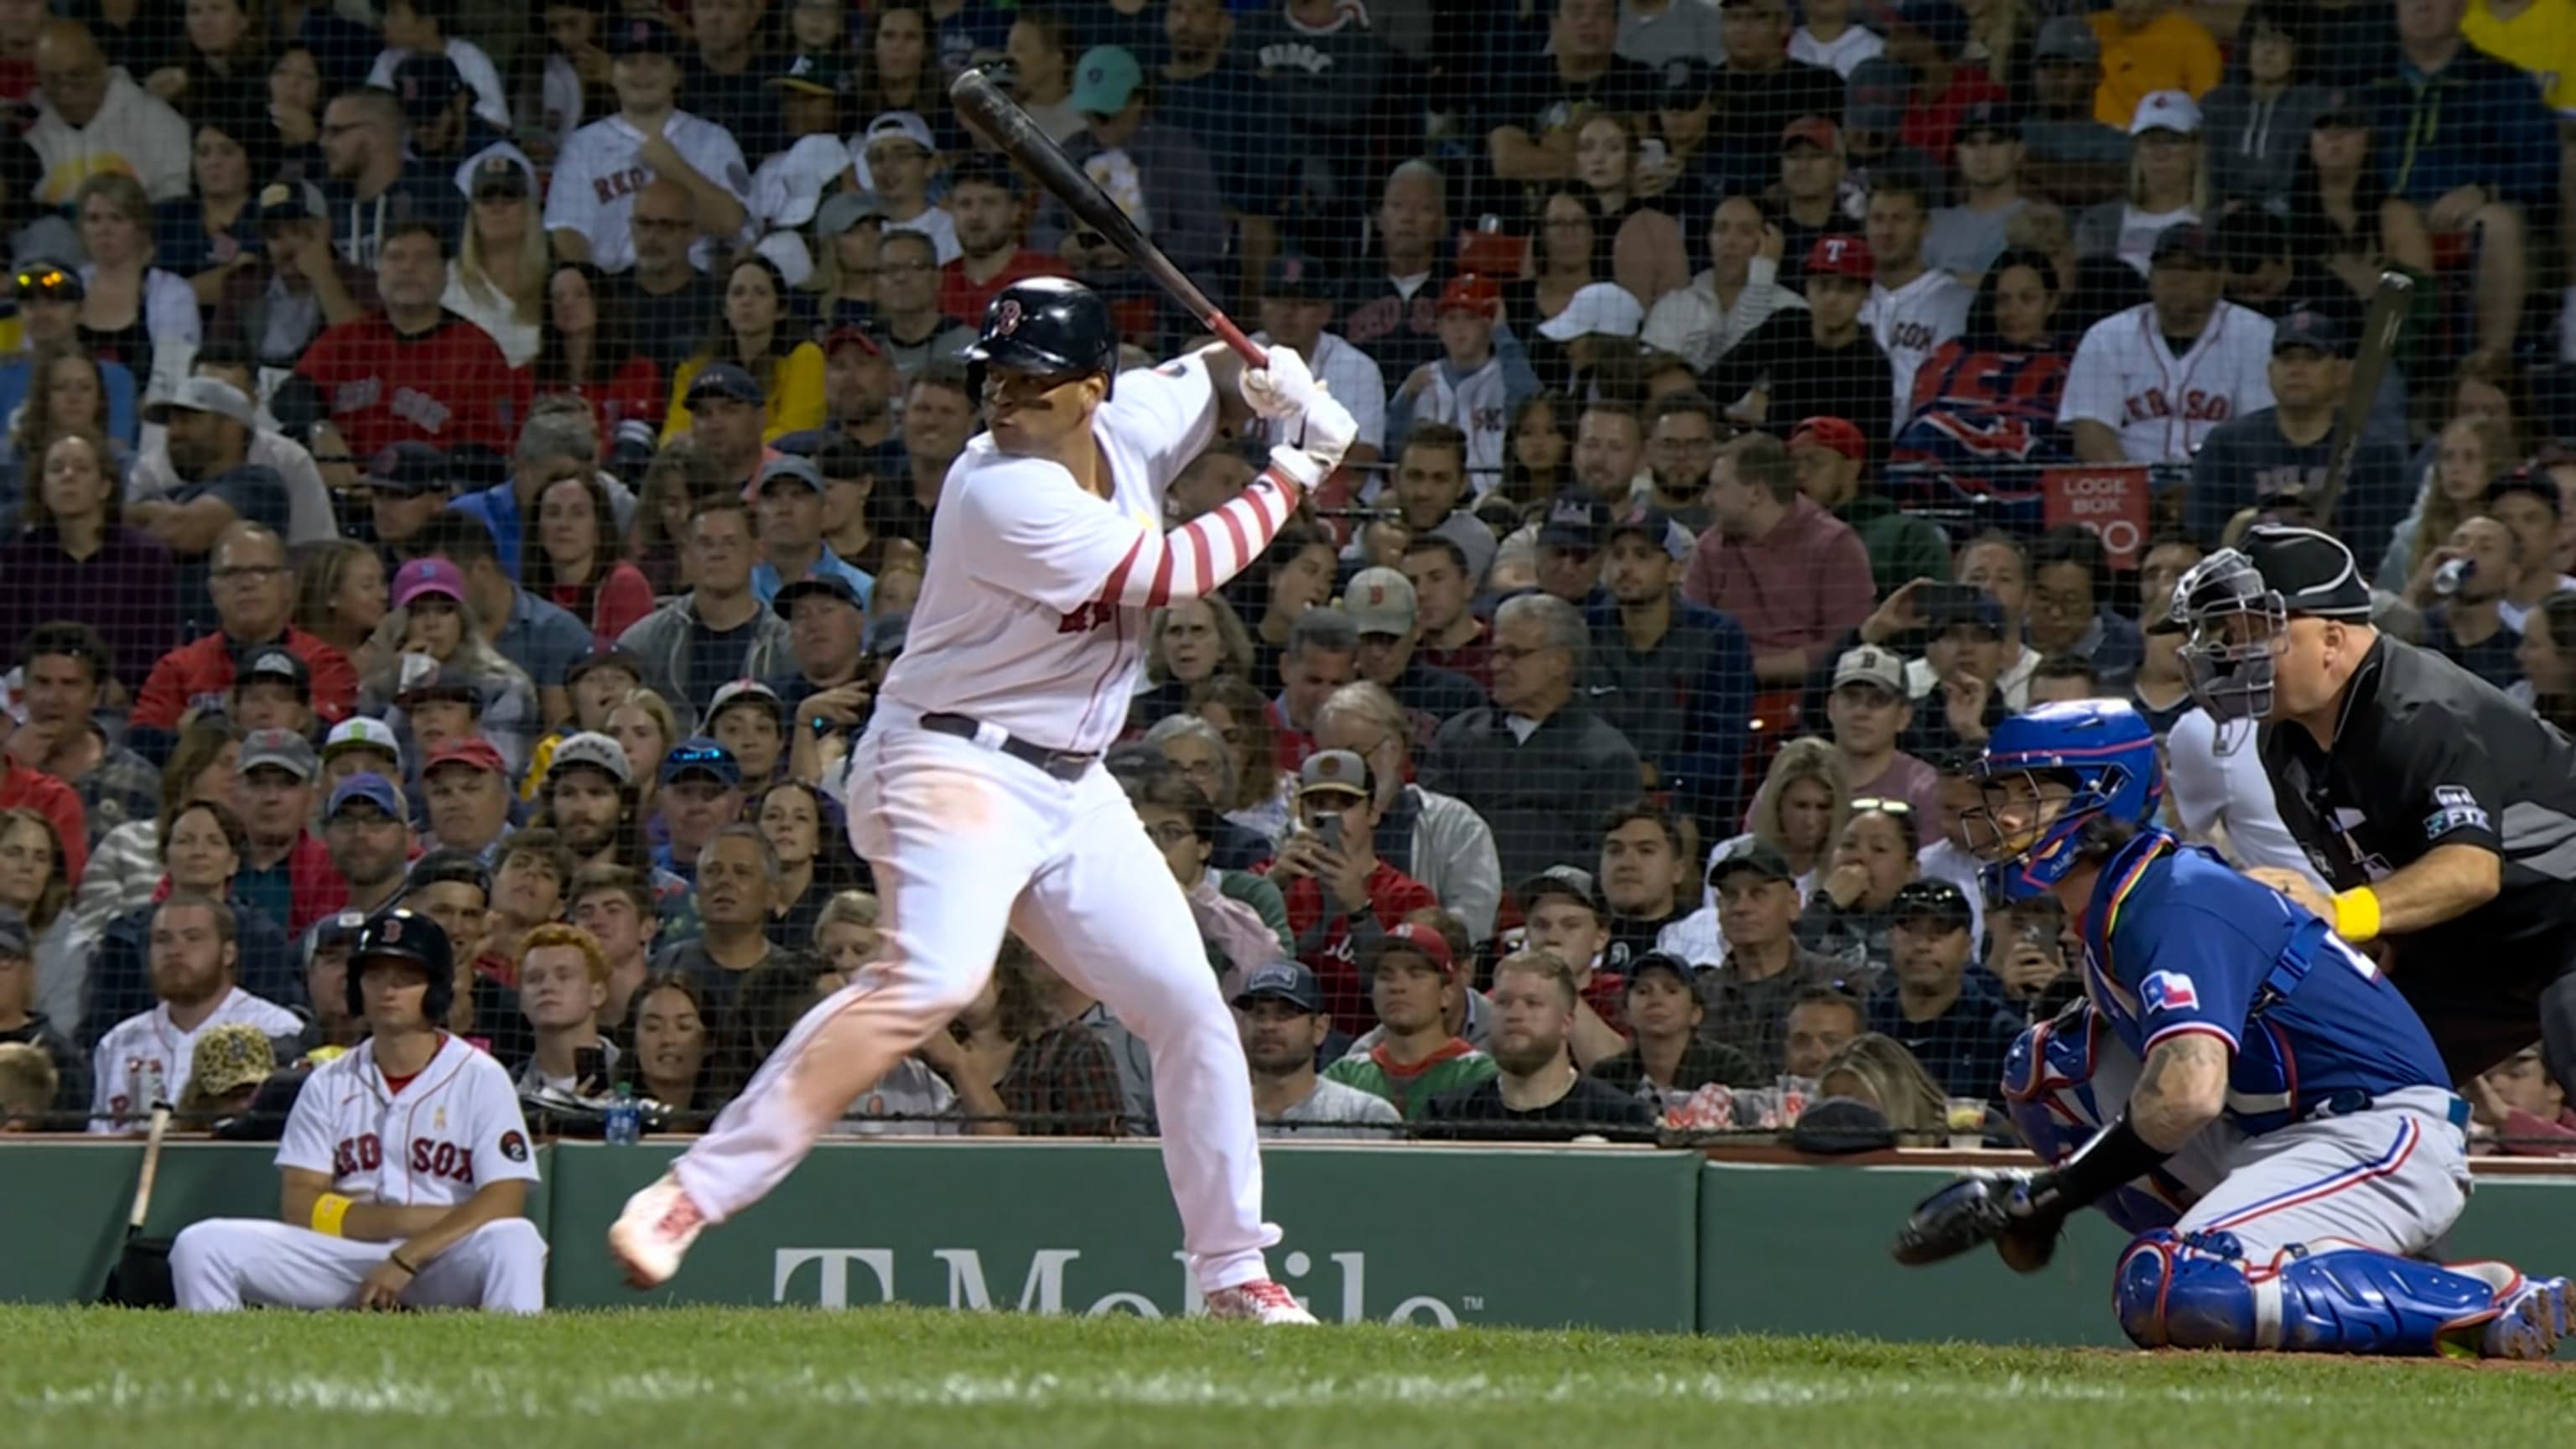 Wong hits 1st MLB homer, Red Sox lose Pivetta, beat Rangers